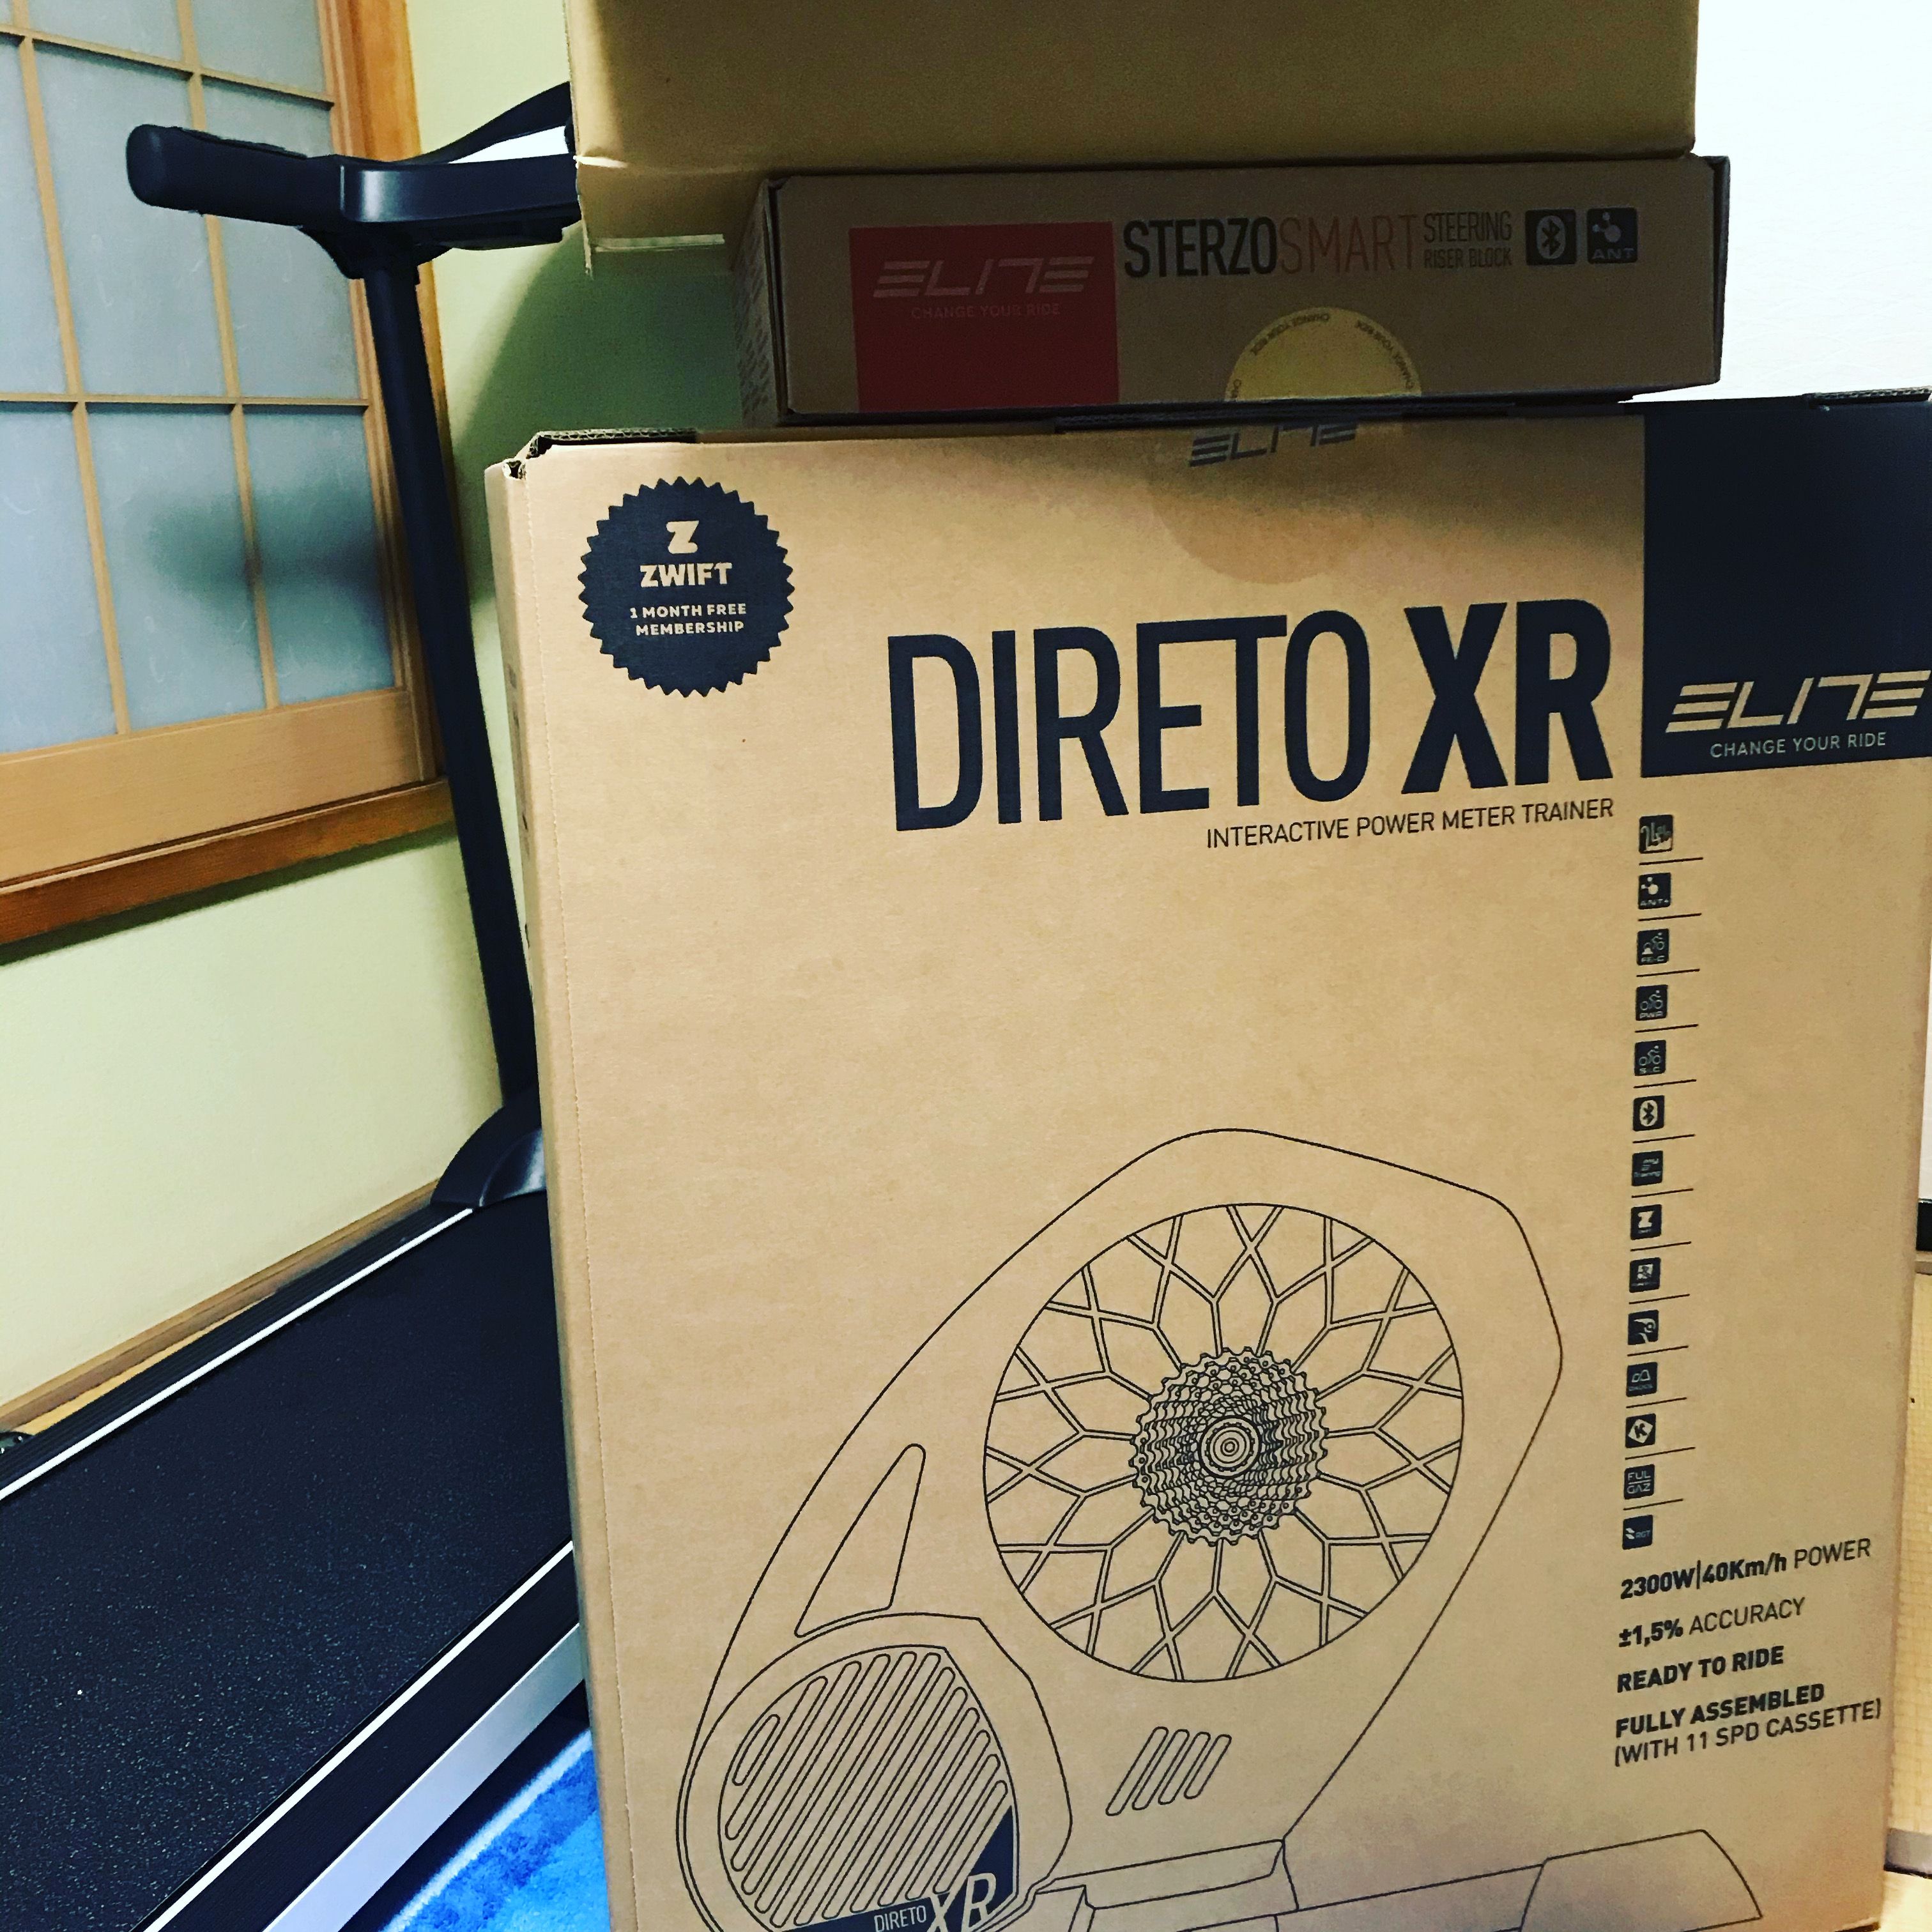 Elite DIRETO XRと sterzo購入 | 自転車と遊ぶブログ - 楽天ブログ